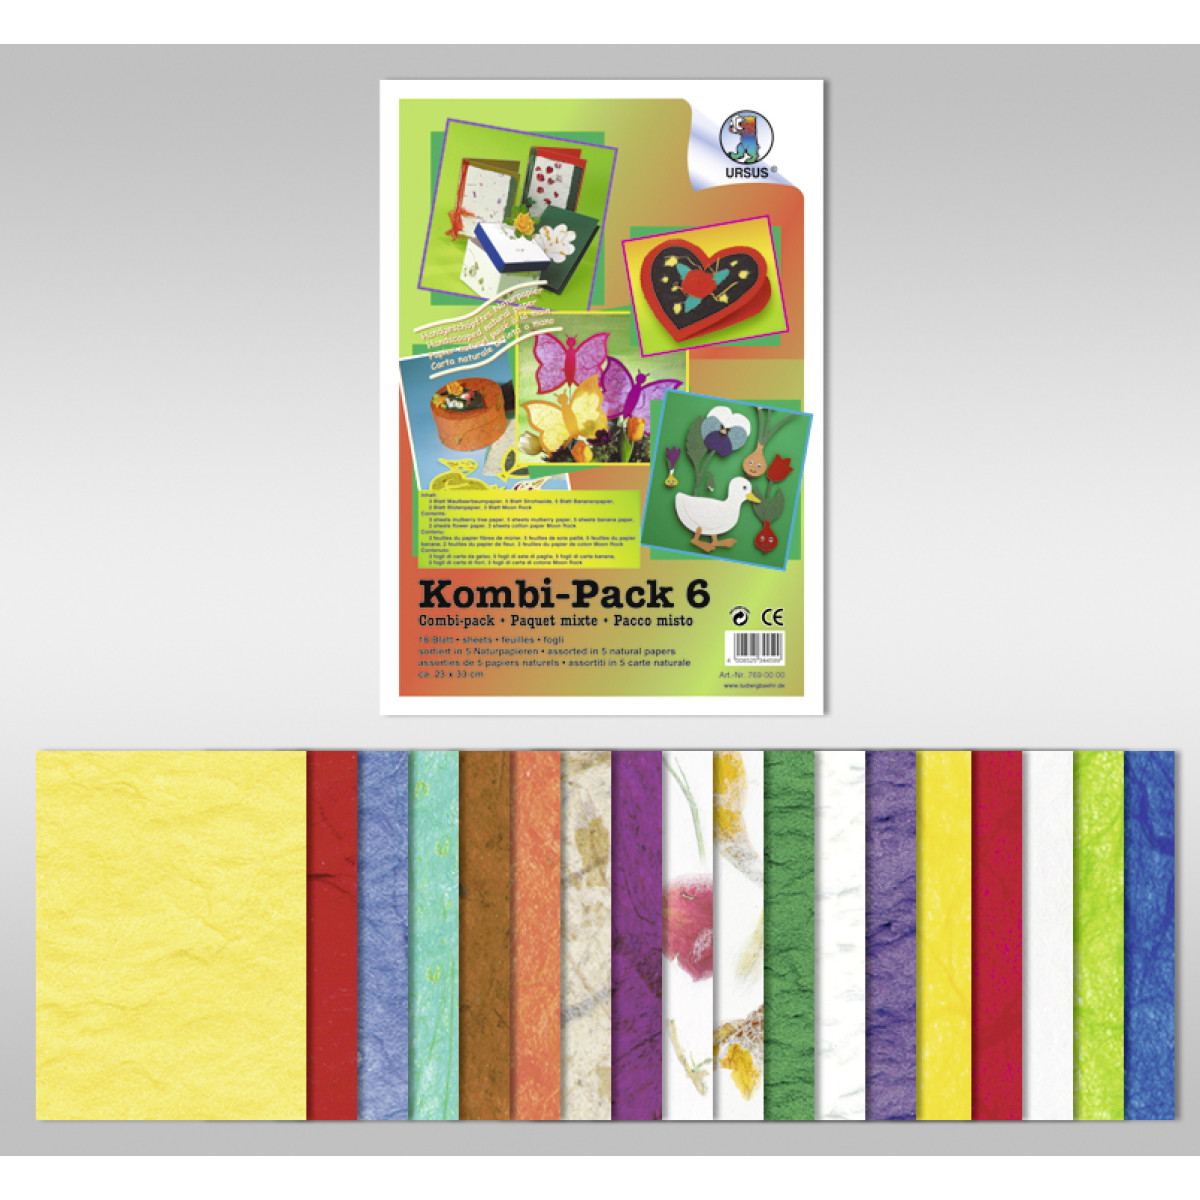 Kombi-Pack 6 "Naturpapier"